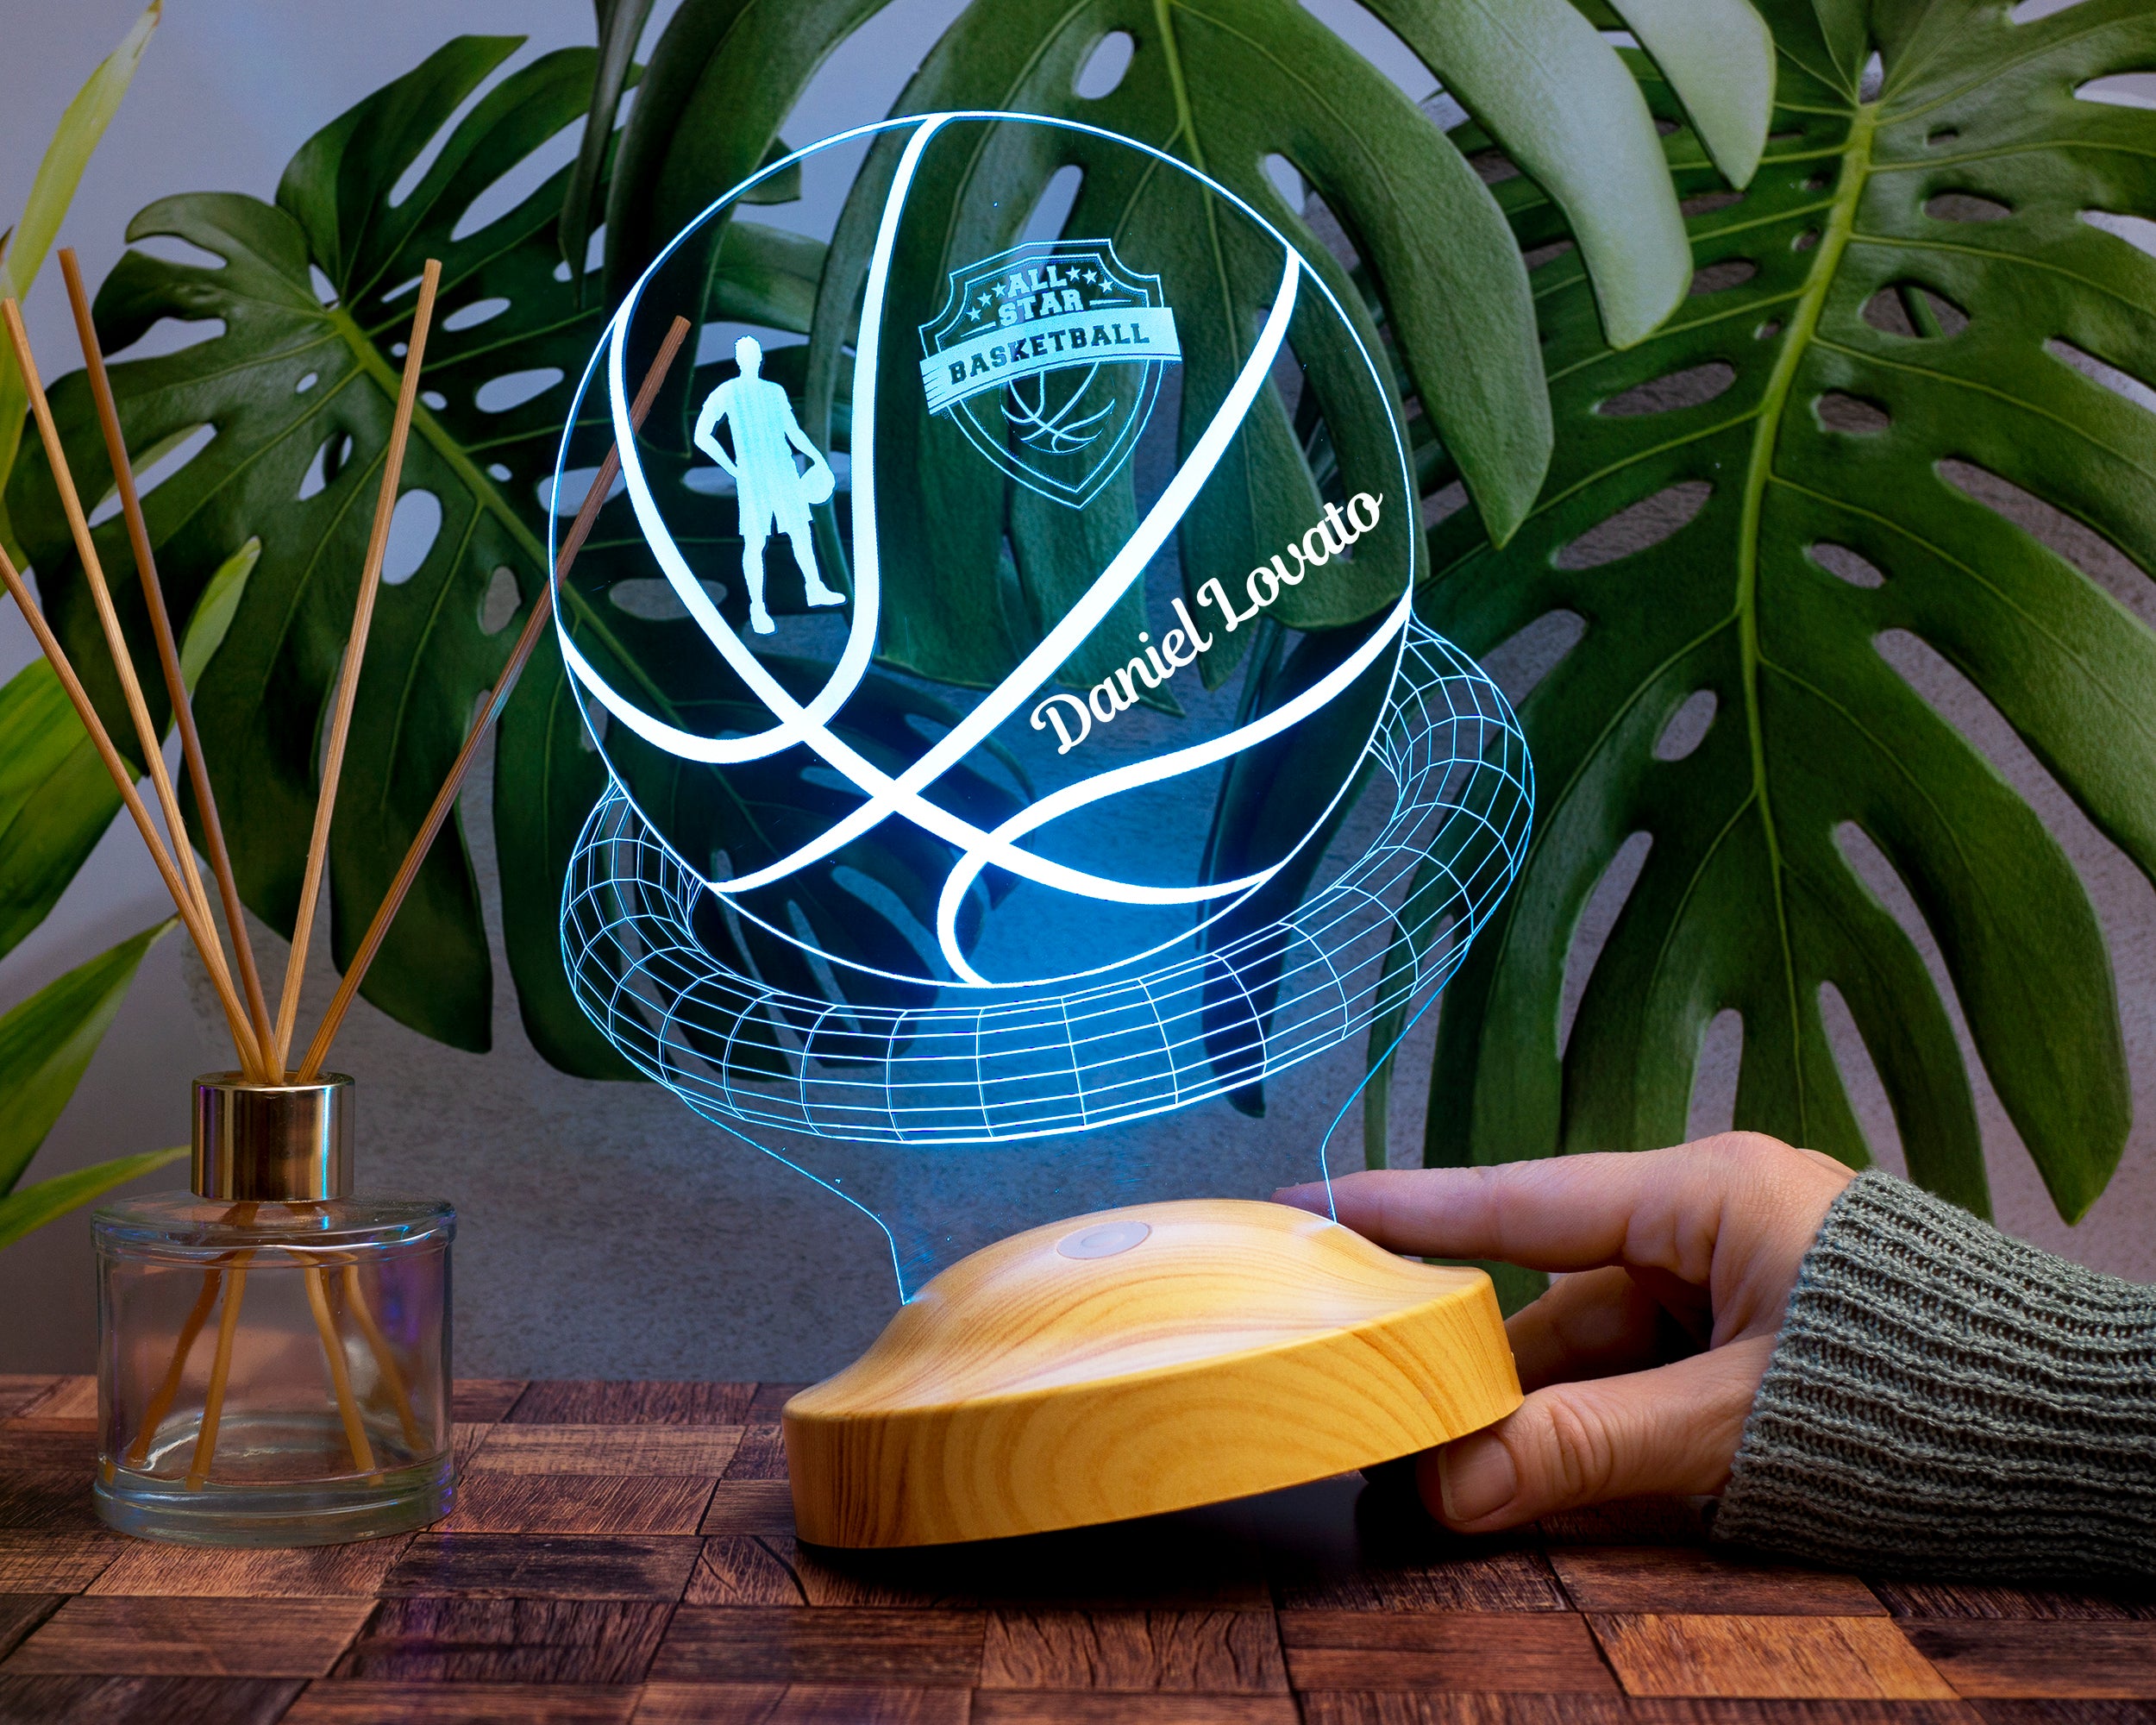 Basketball Personalisierte Lampe mit Wunschtext